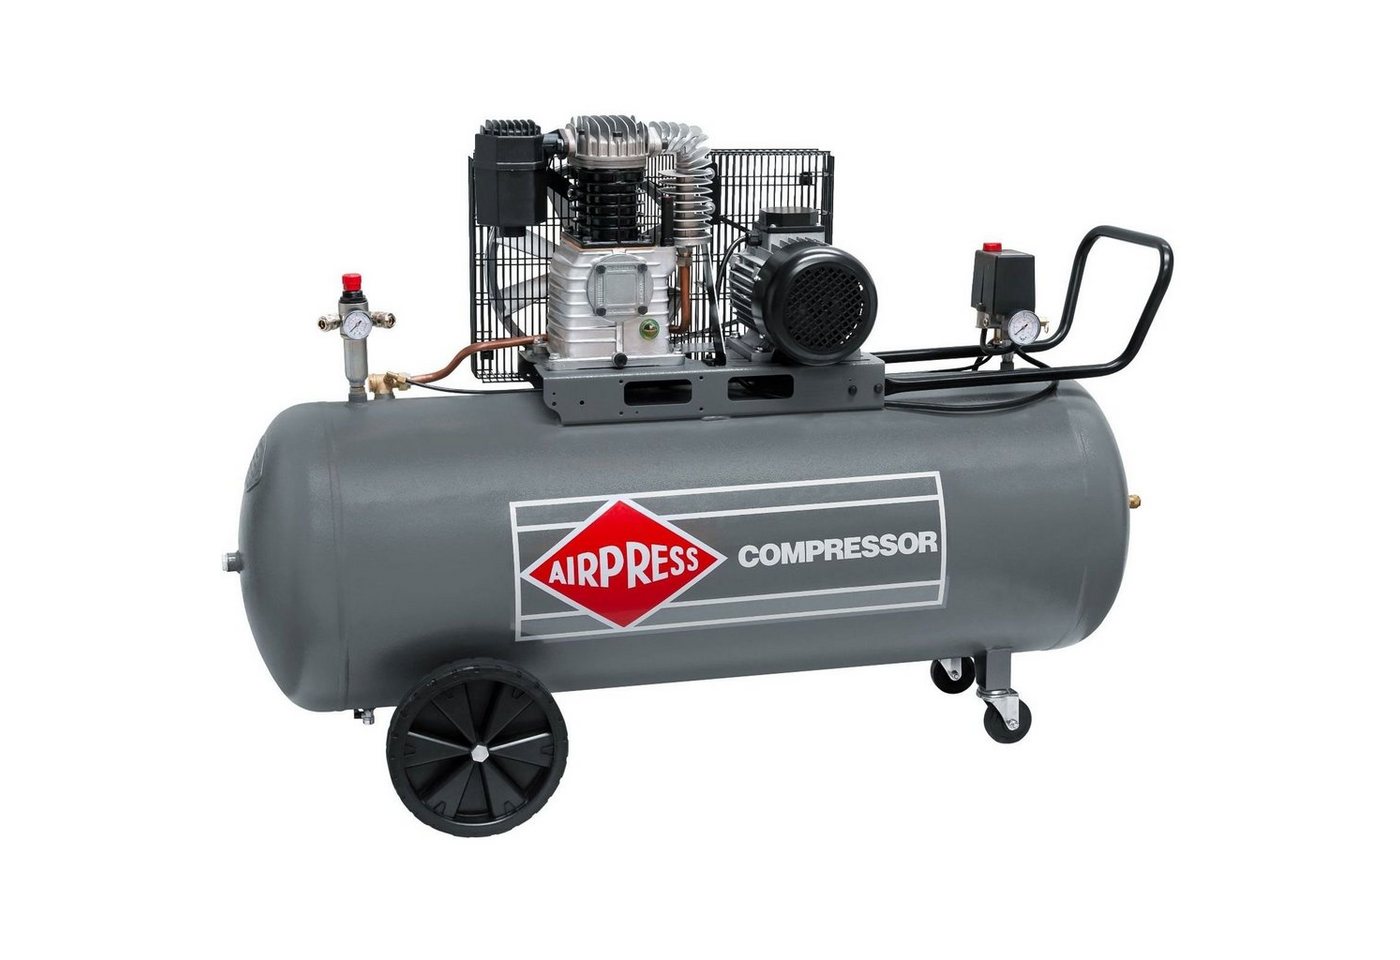 Airpress Kompressor Druckluft- Kompressor 4,0 PS 200 Liter 10 bar HK600-200 Typ 360564, max. 10 bar, 200 l, 1 Stück von Airpress